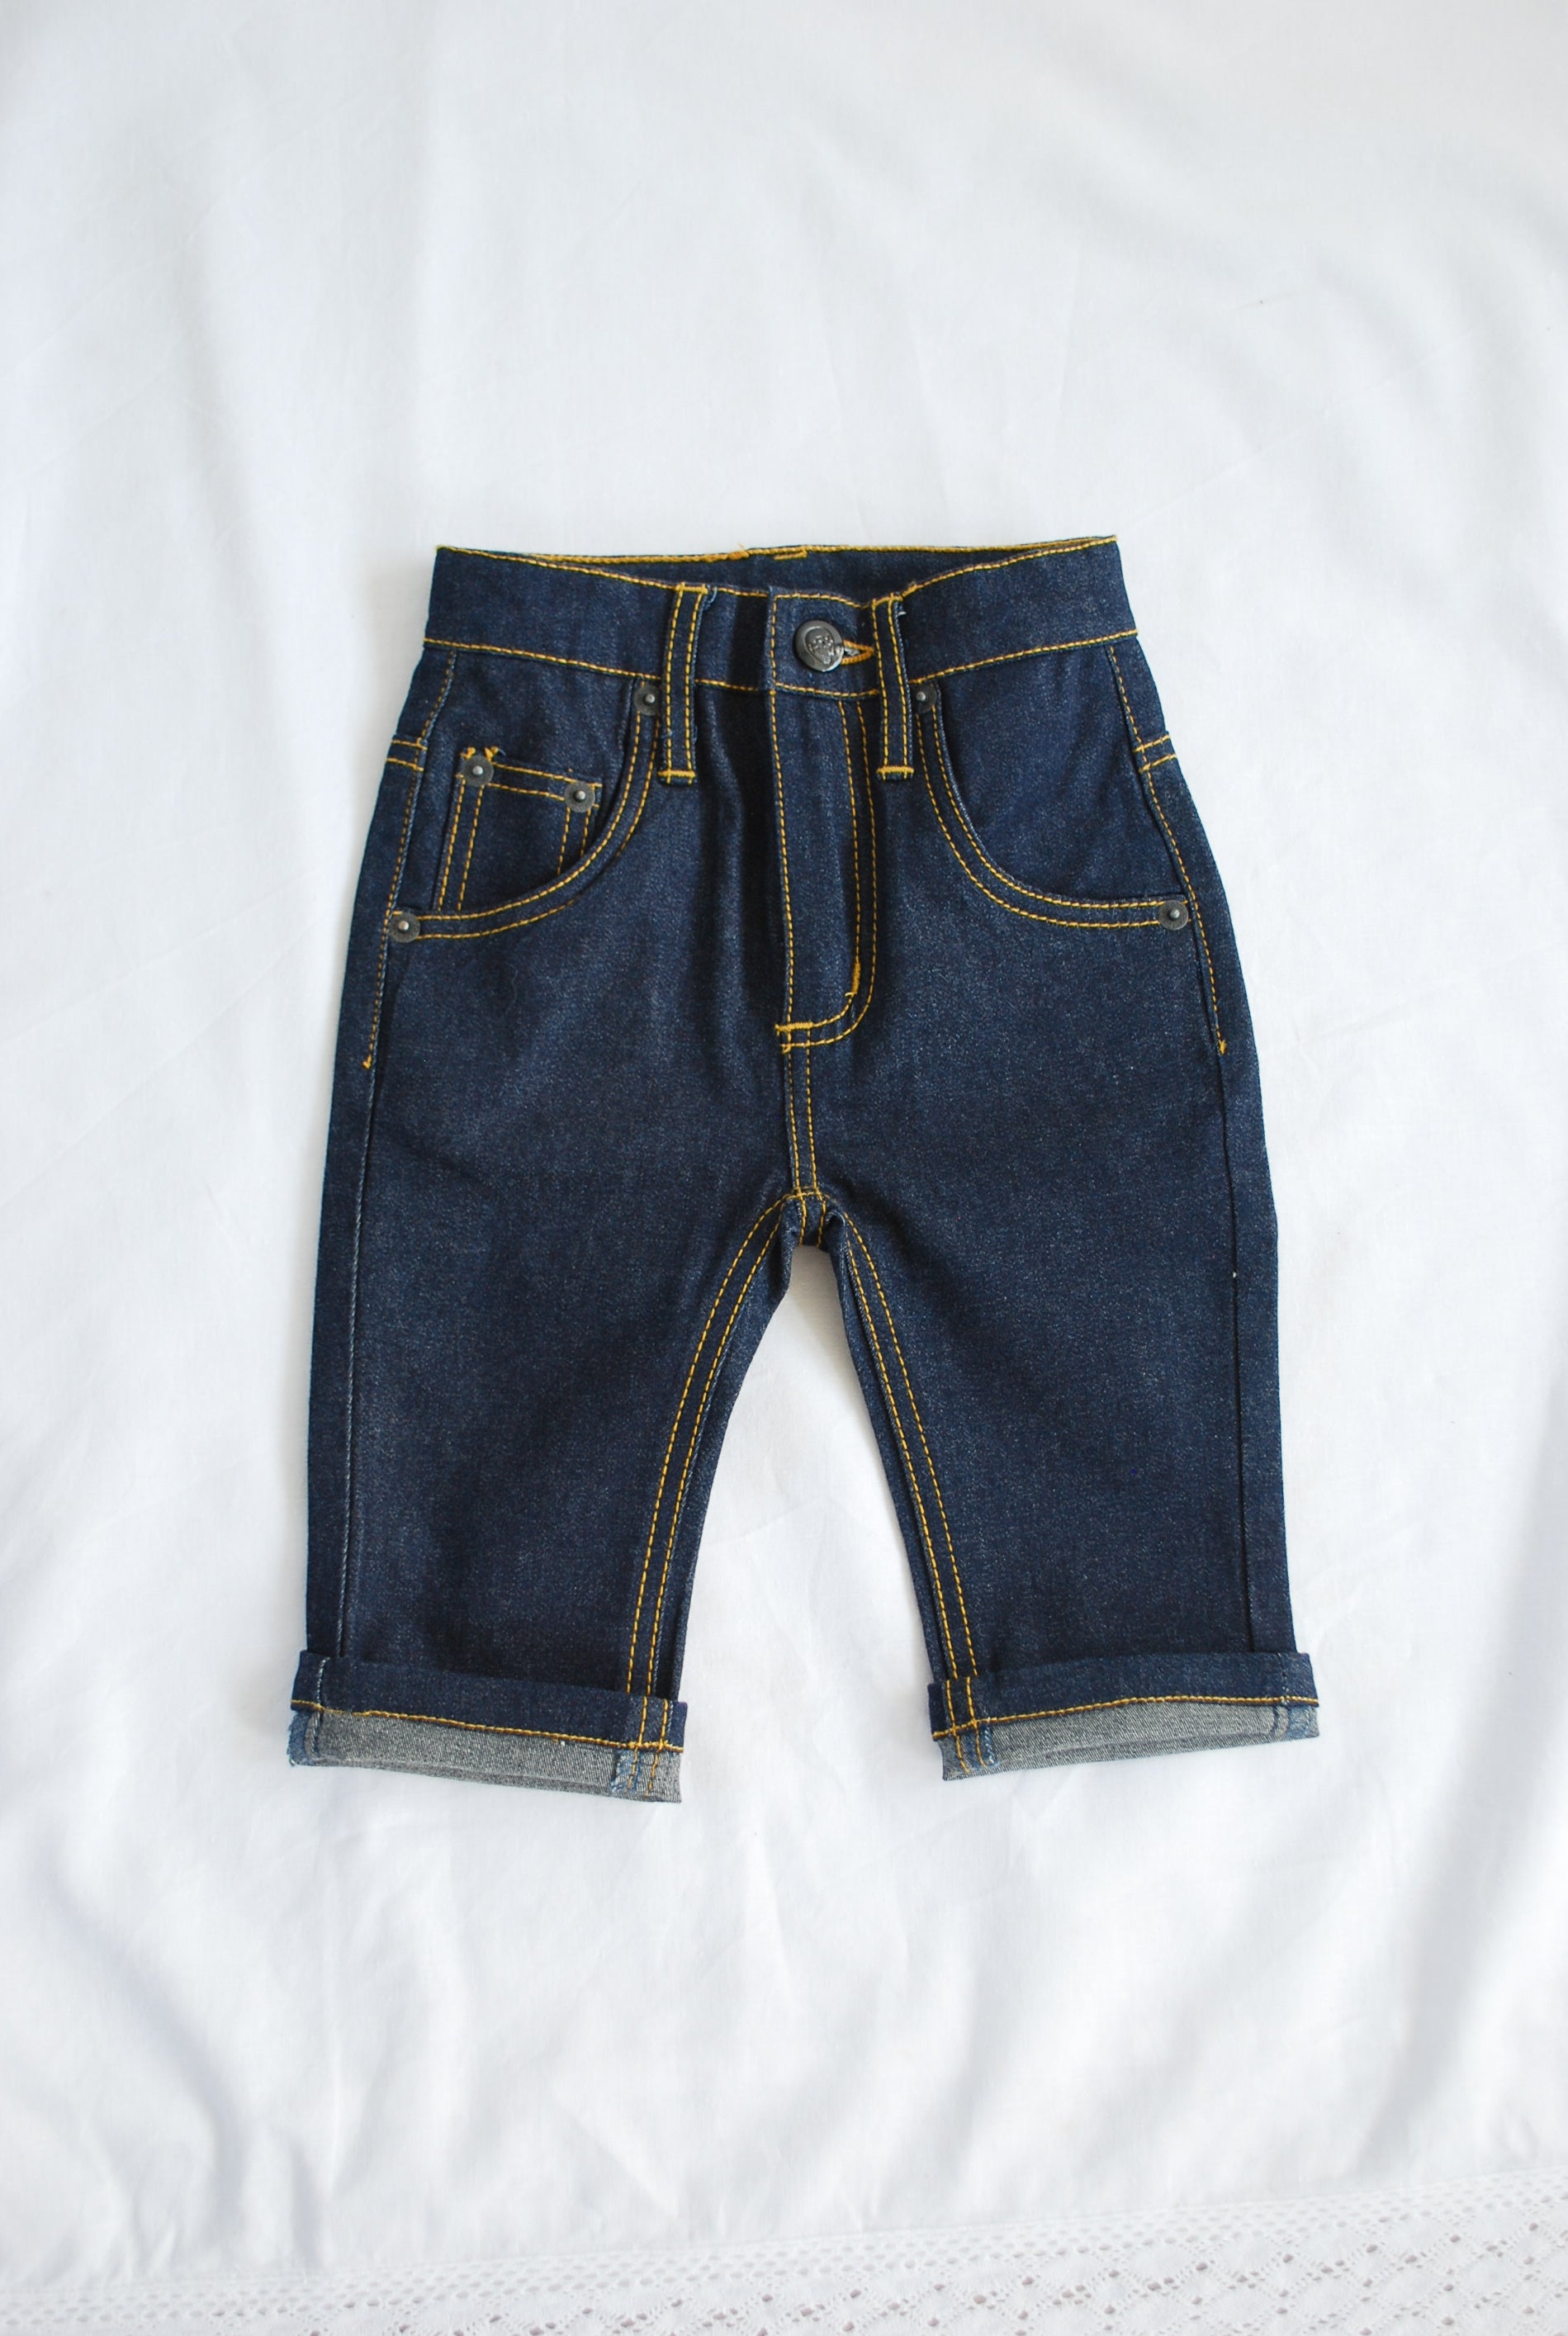 Waakzaamheid volgorde zak Cheap Monday jeans mt 1Y – Studio Cornetto